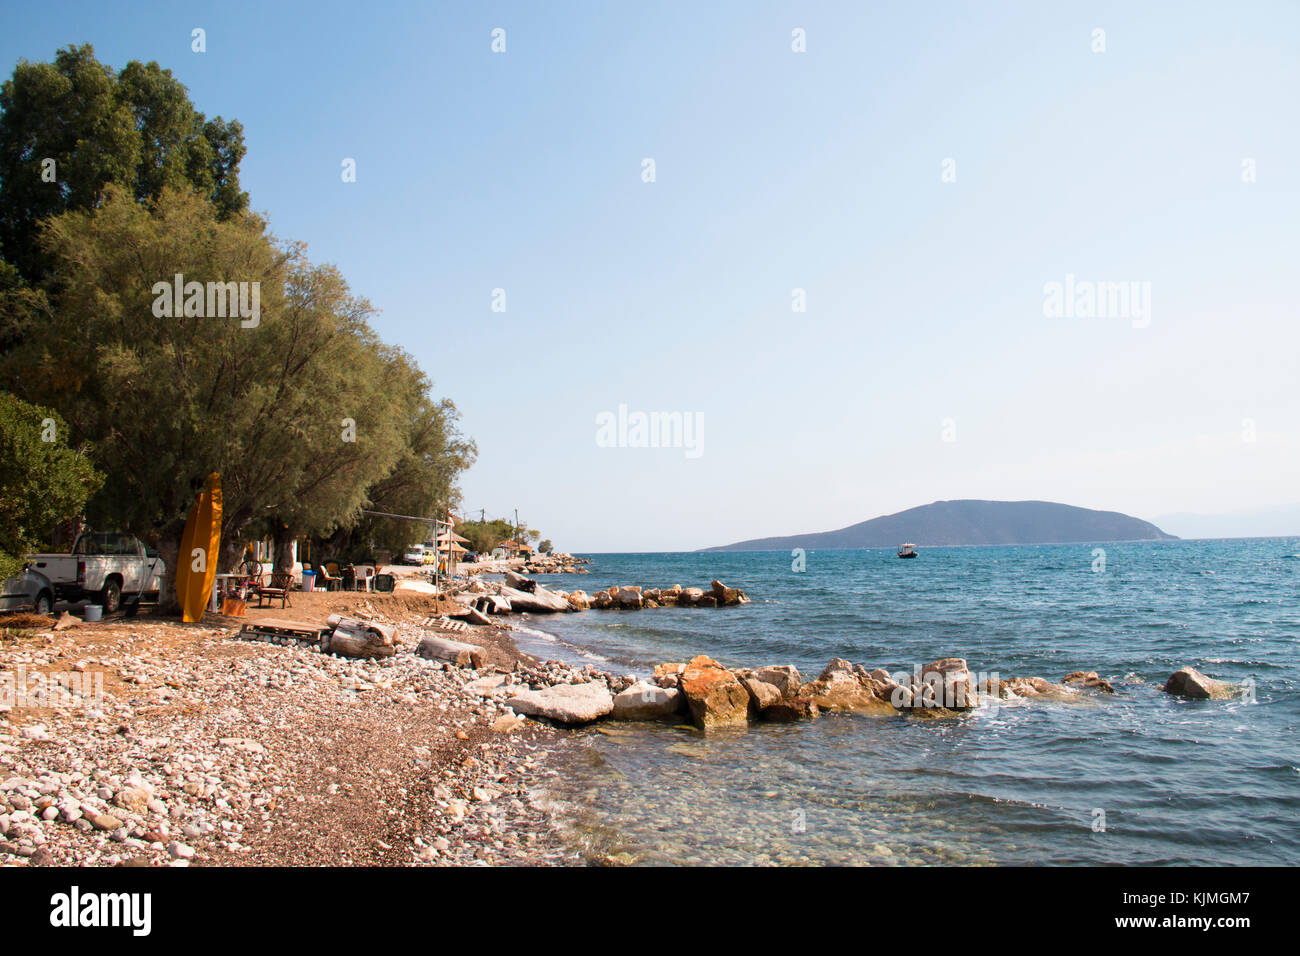 The beach of the small town Iria near Nafplio in Greece Stock Photo